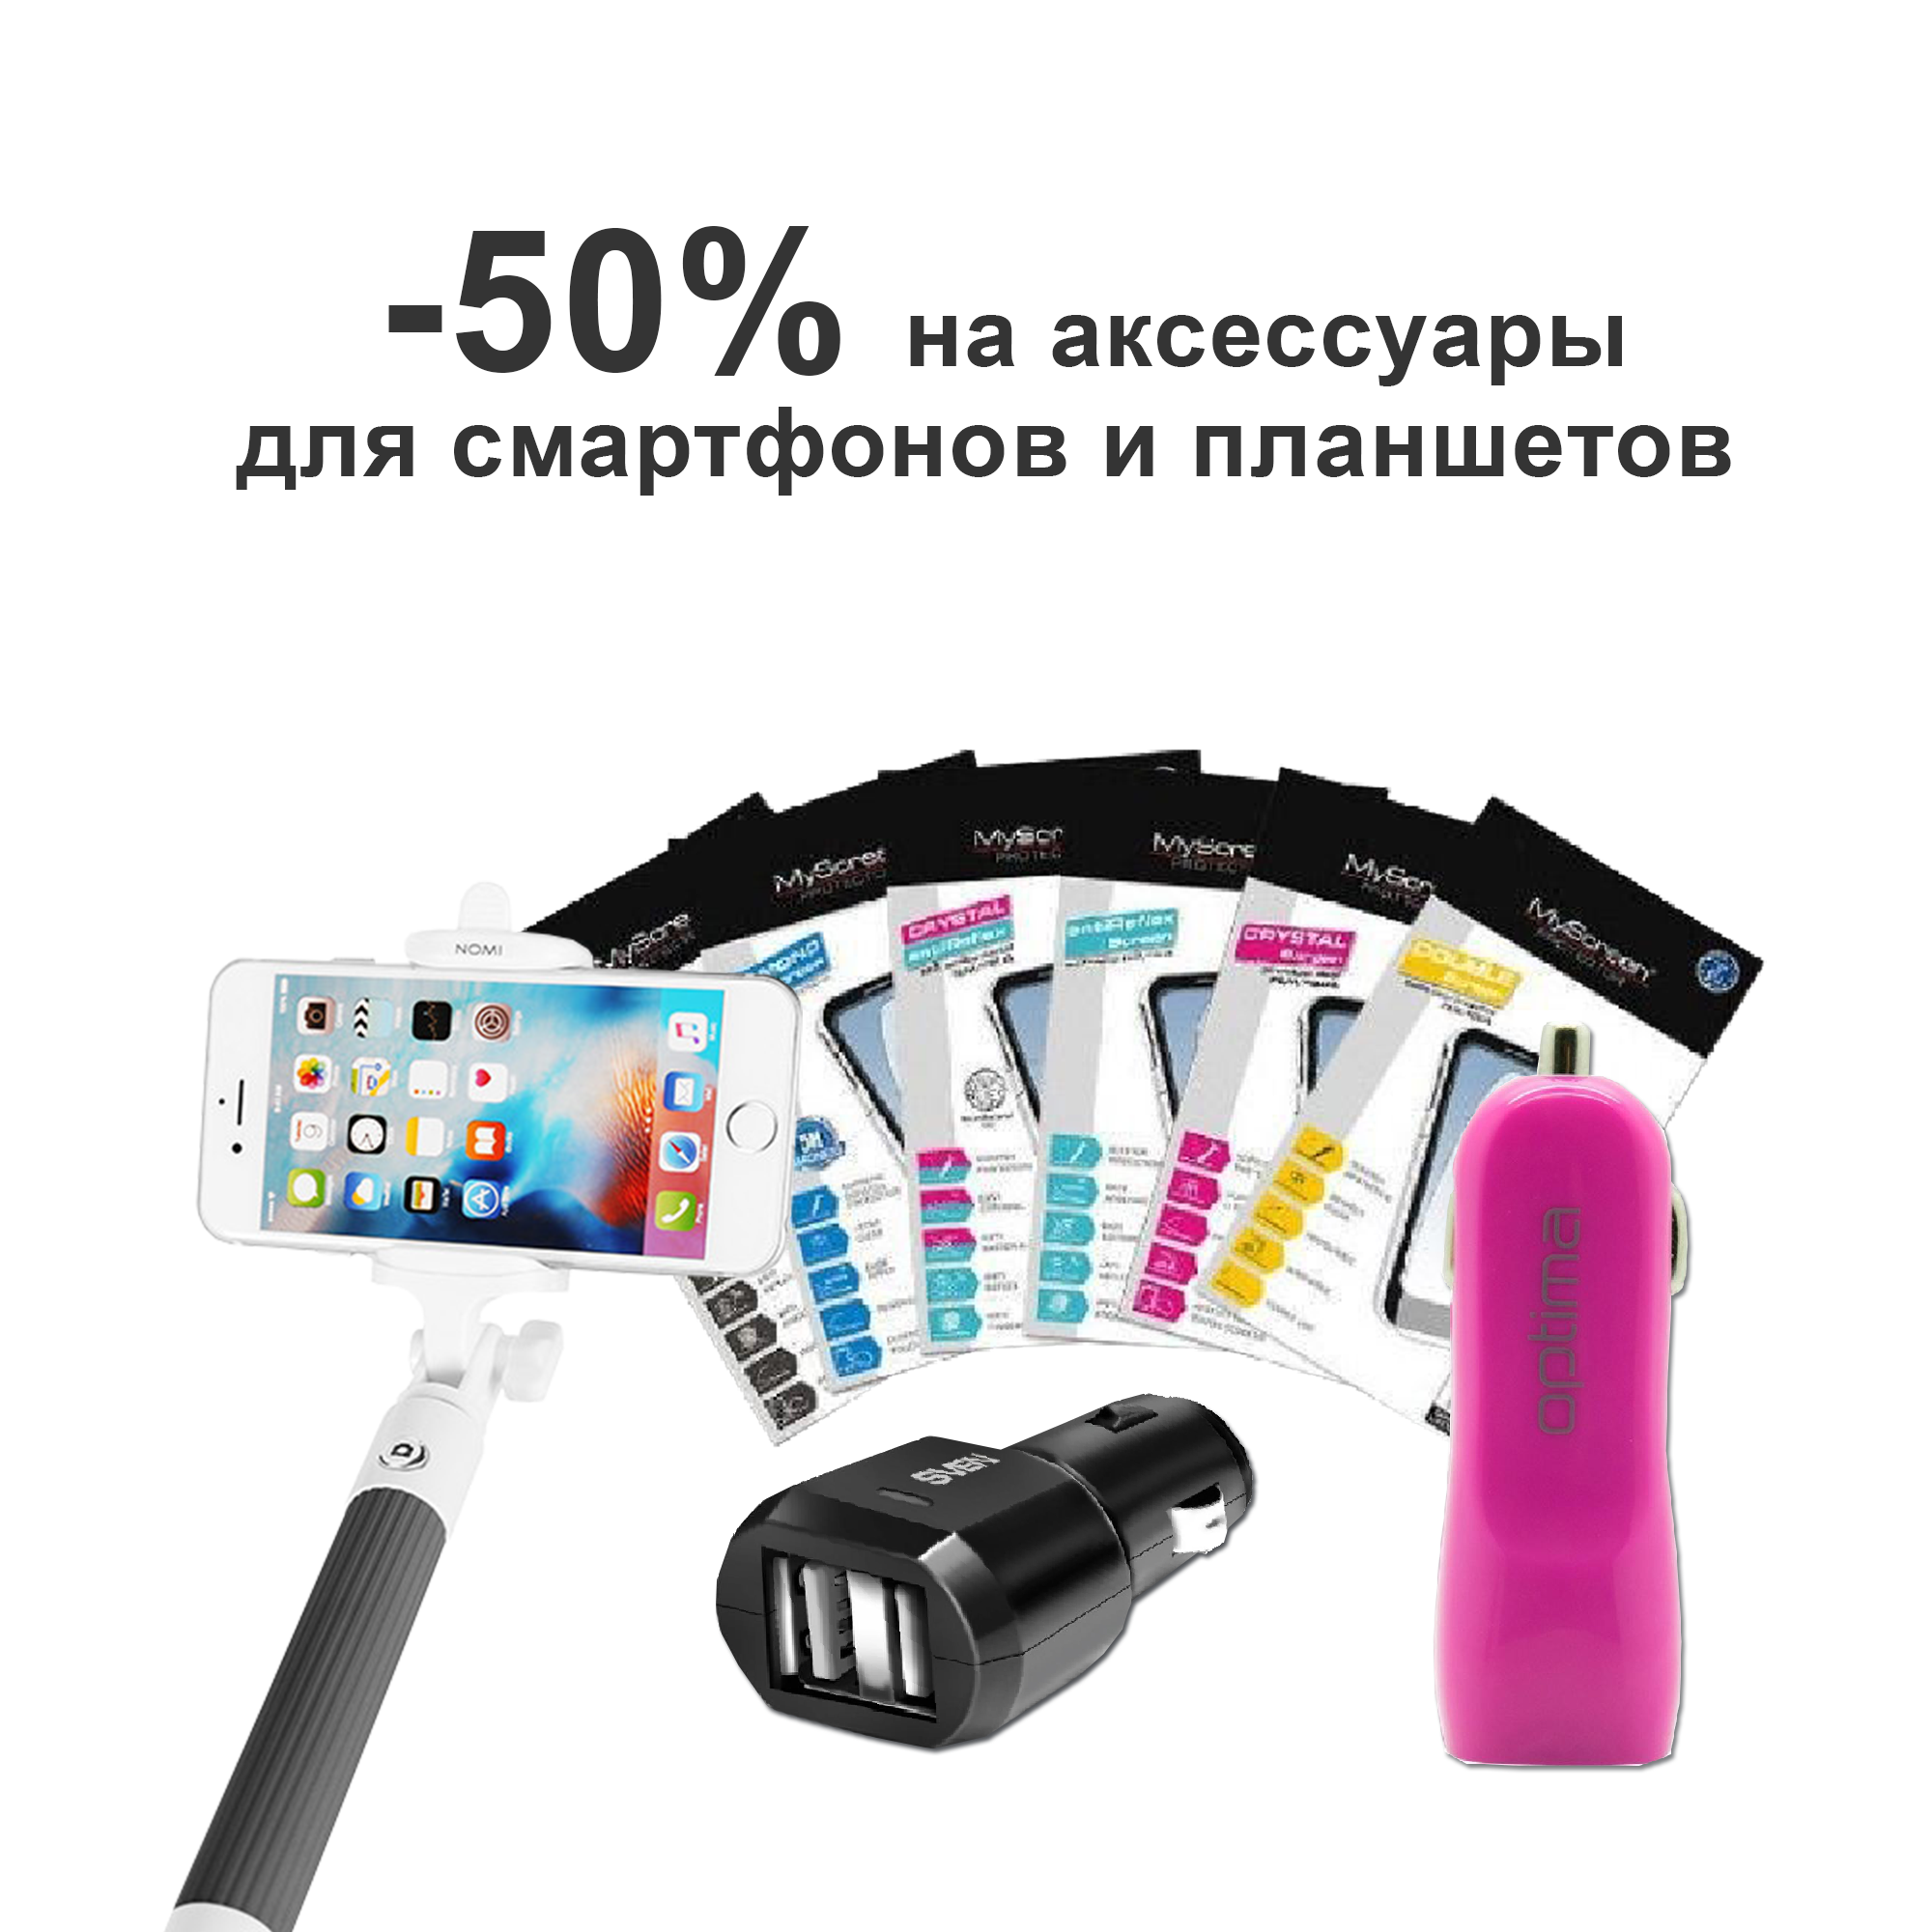 -50% на аксессуары к телефонам и планшетам